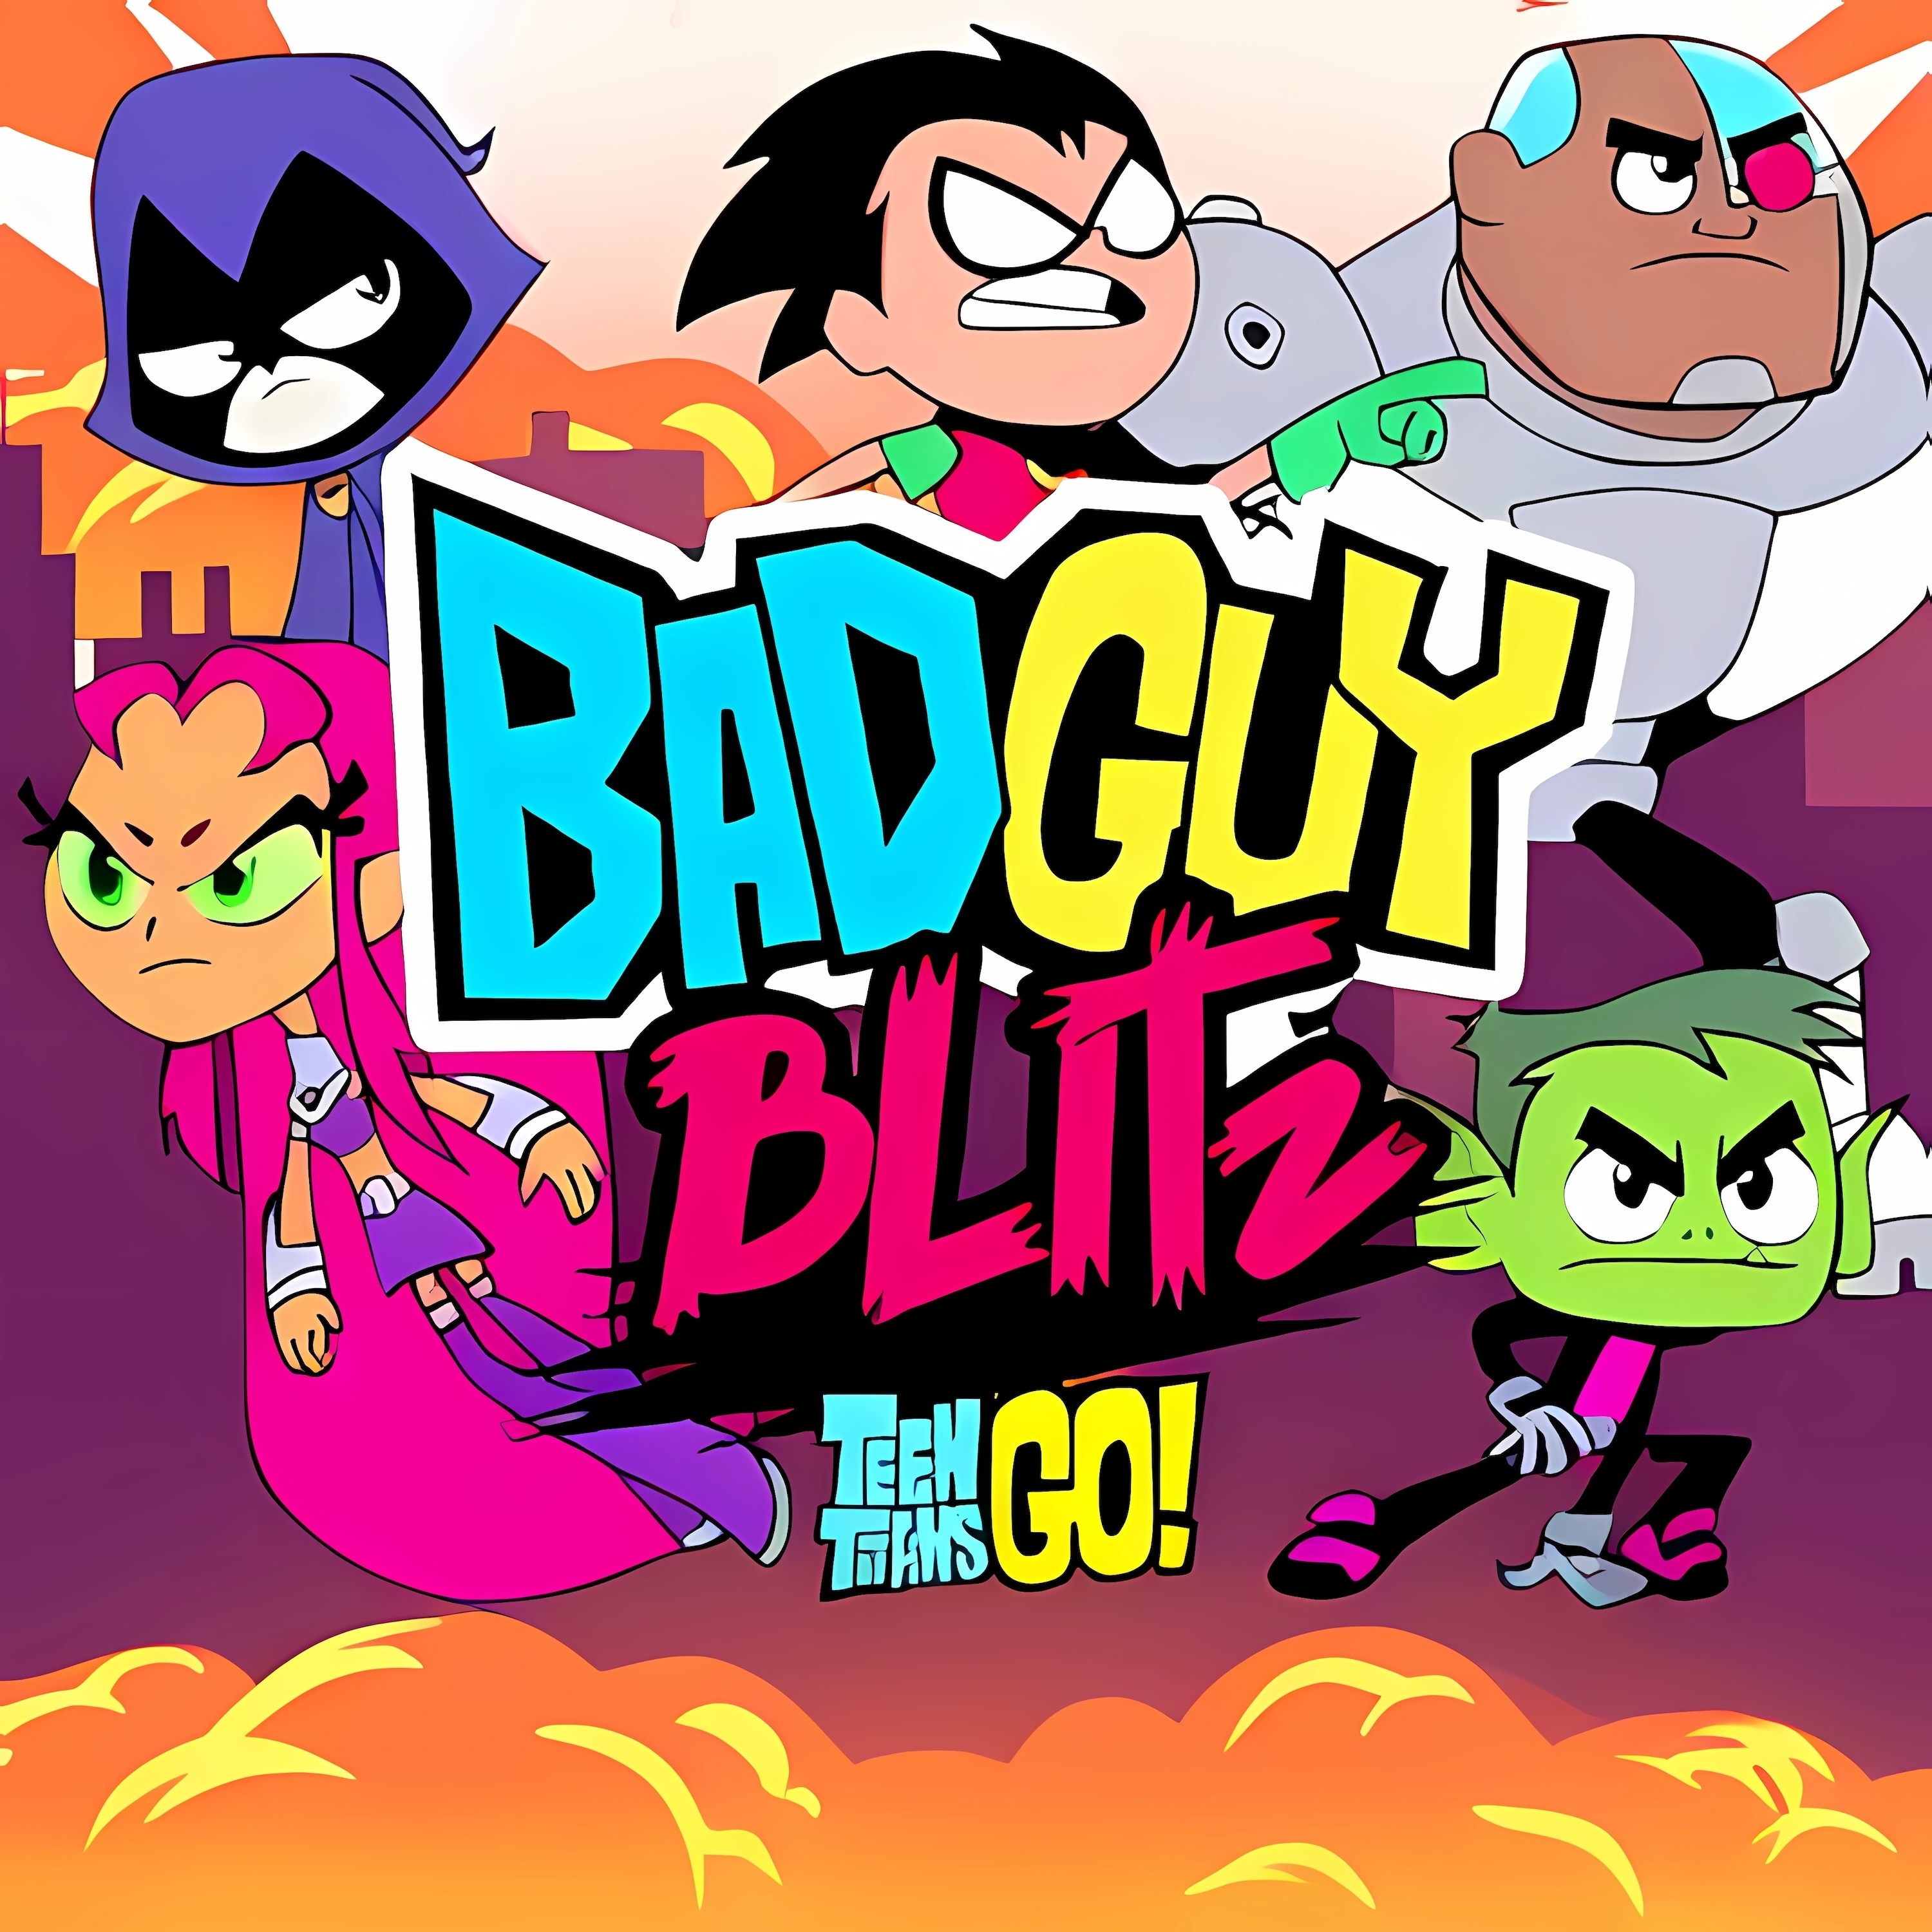 Teen Titans Go: Bad Guy Blitz